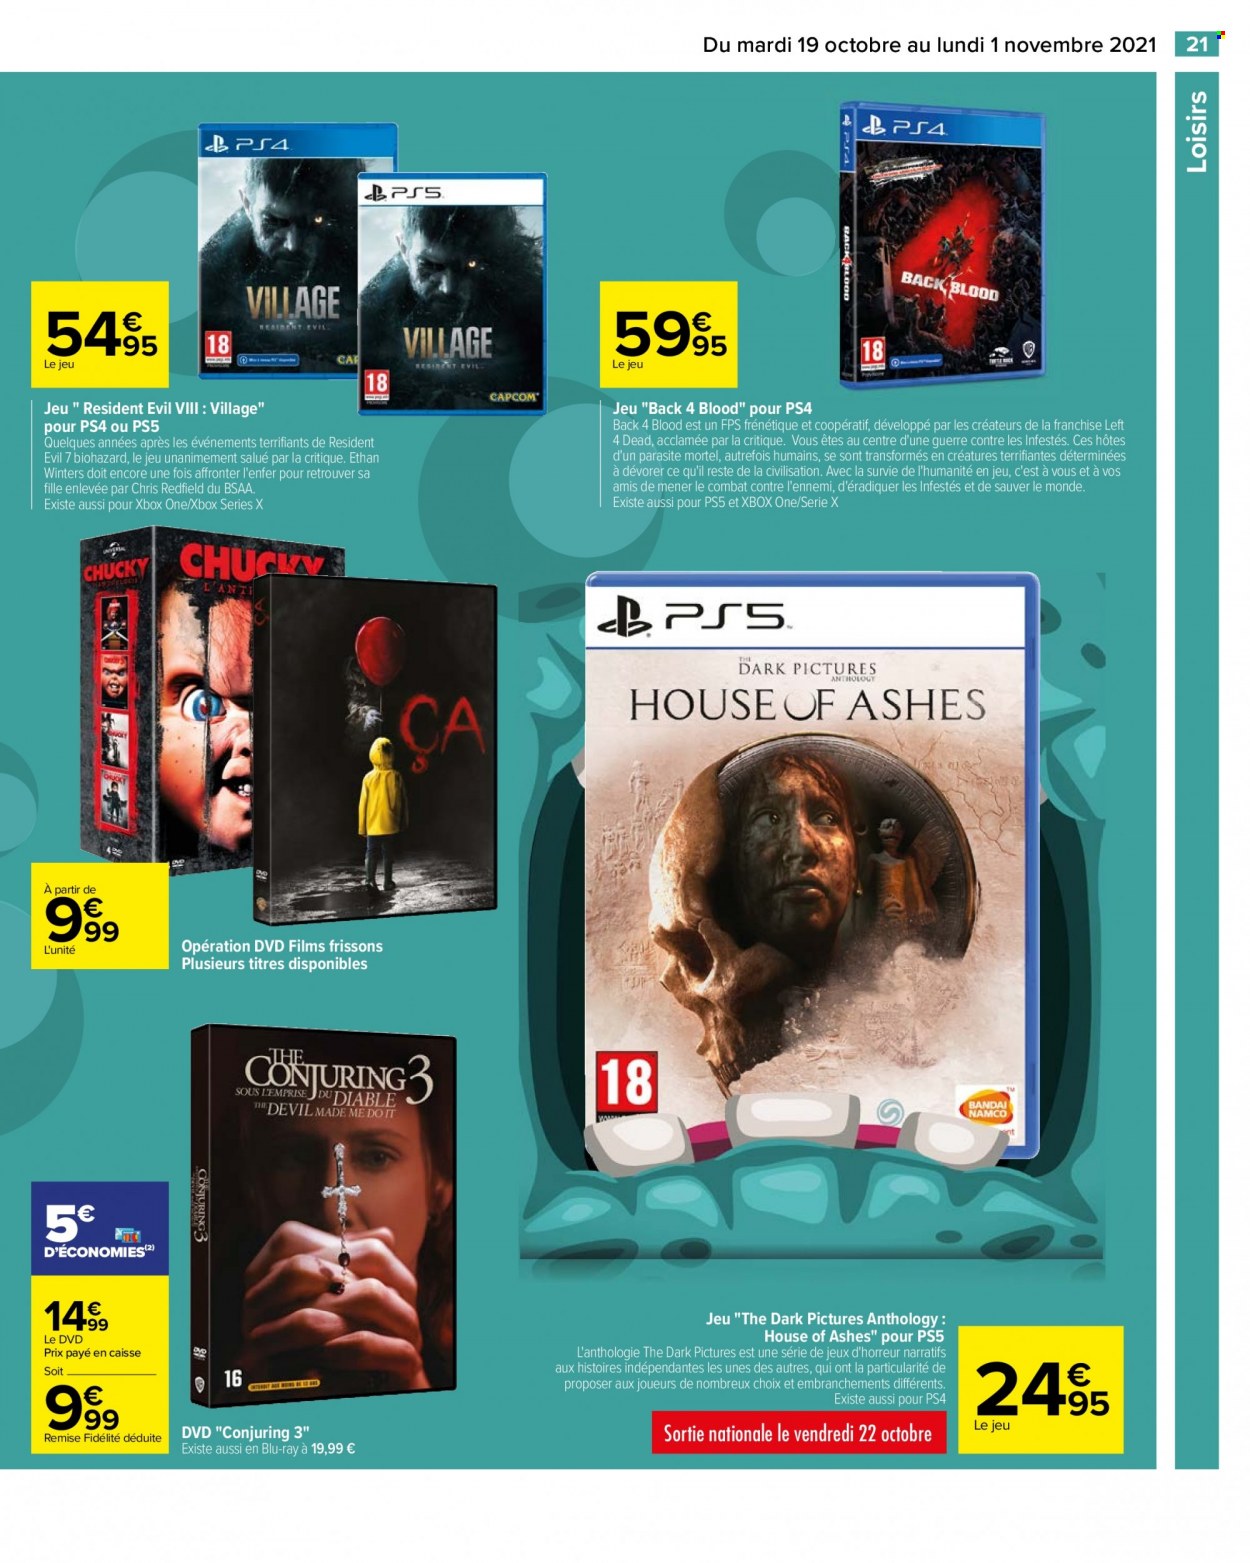 thumbnail - Catalogue Carrefour Hypermarchés - 19/10/2021 - 01/11/2021 - Produits soldés - DVD, Xbox, Xbox One. Page 21.